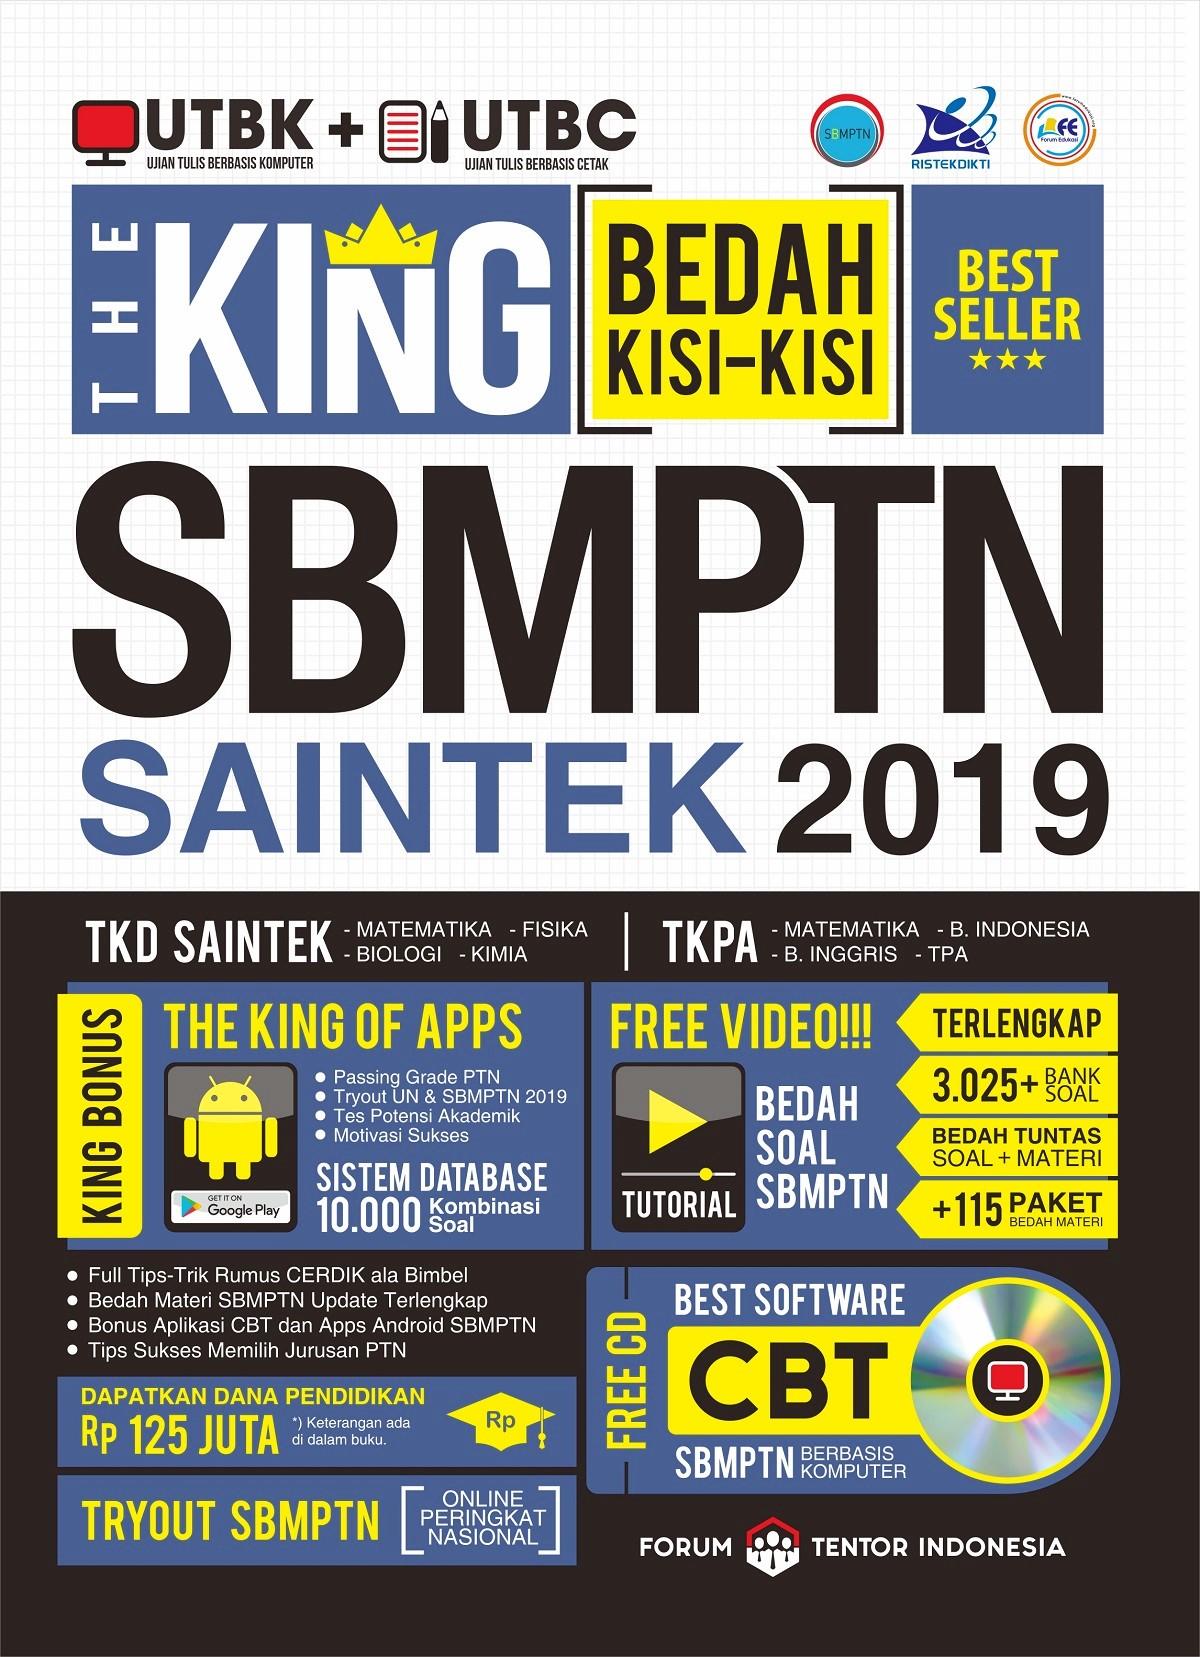 THE KING BEDAH KISI KISI SBMPTN SAINTEK 2019